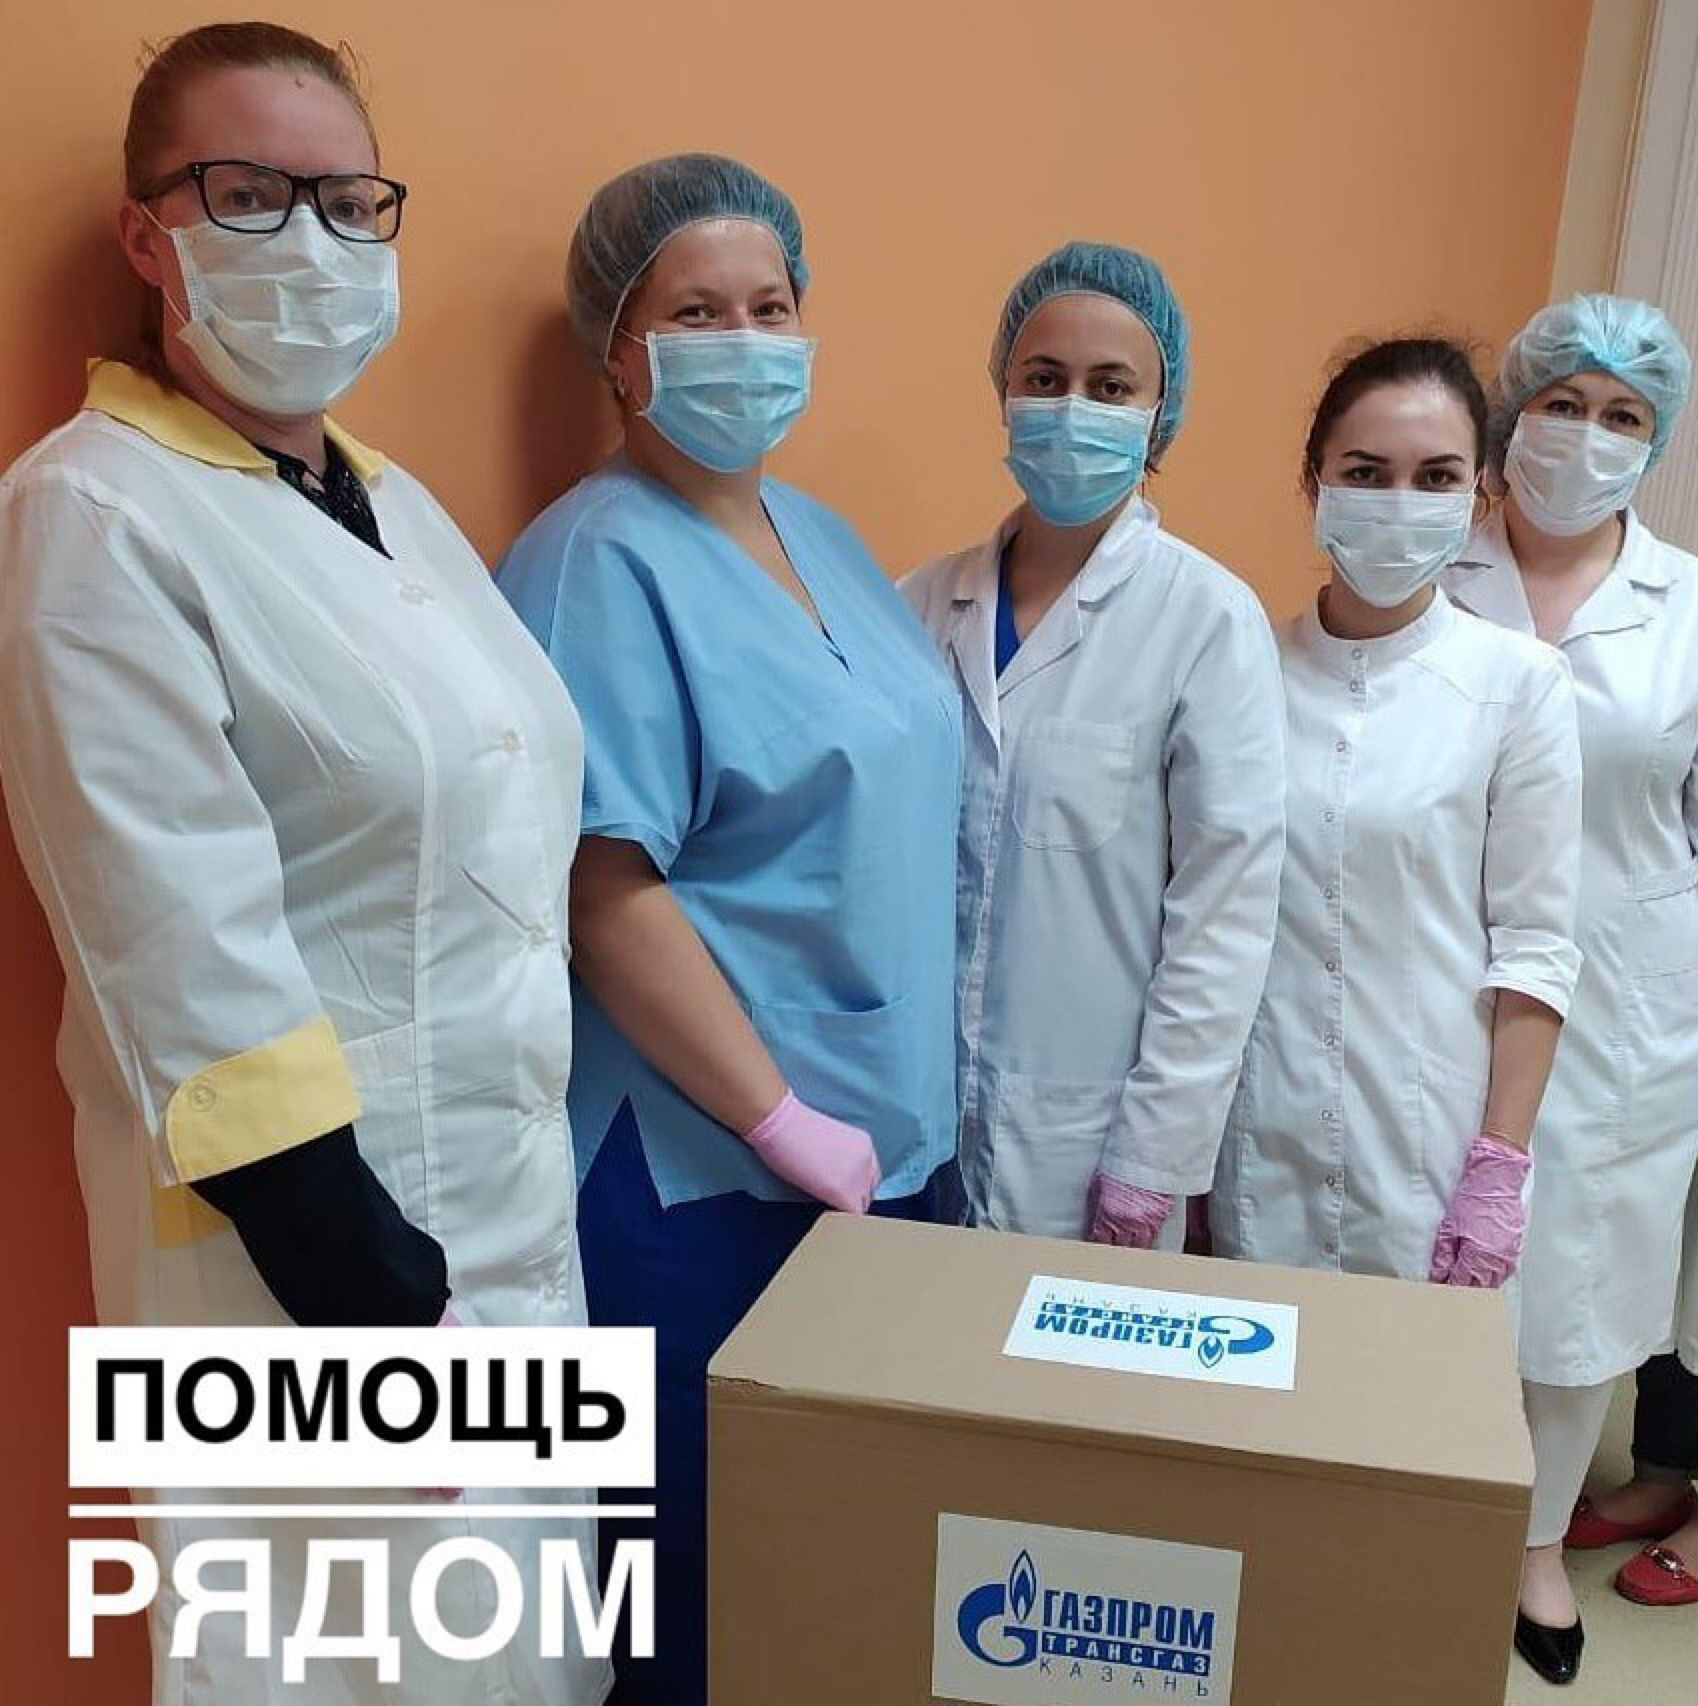 Employees of Gazprom Transgaz Kazan hold charity event